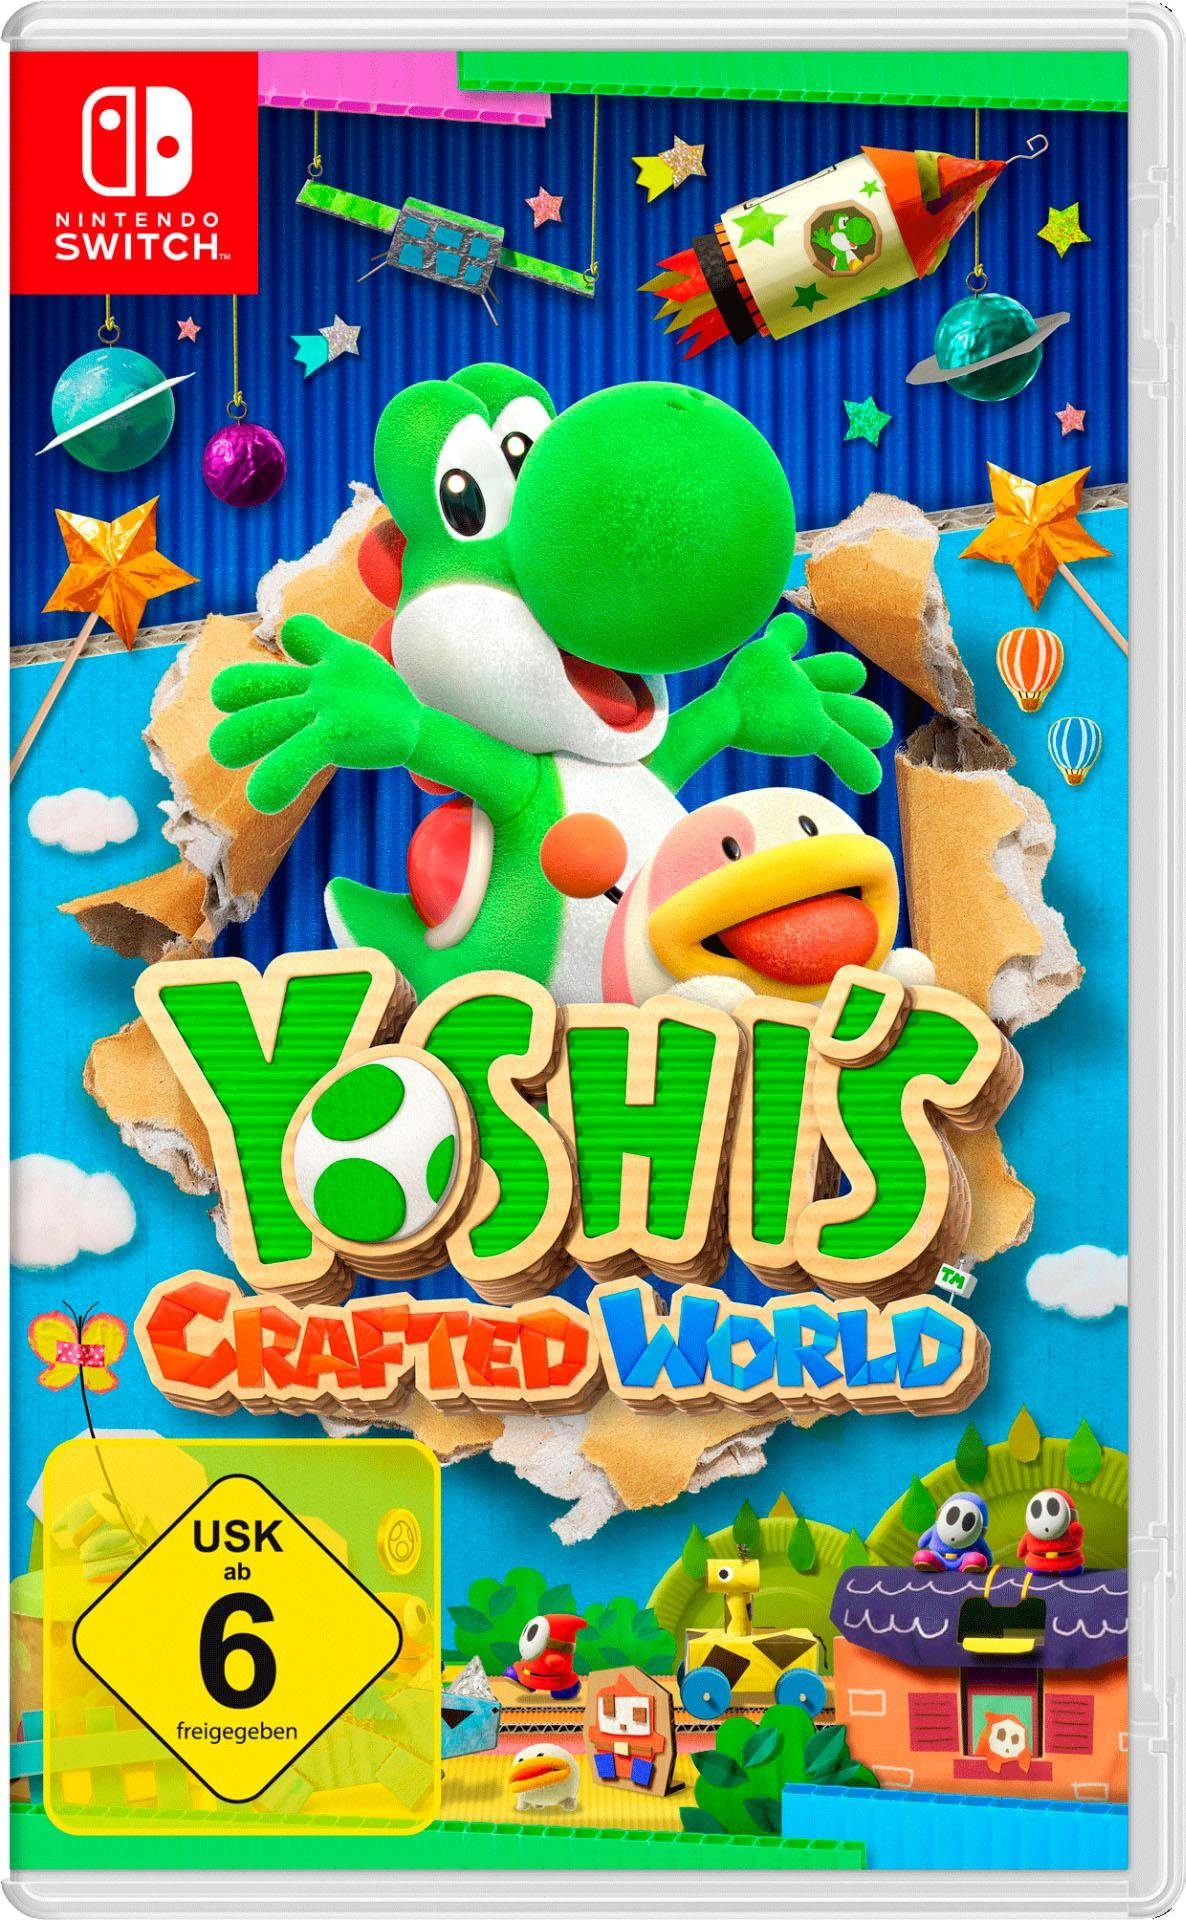 Yoshi’s World Nintendo Crafted Switch